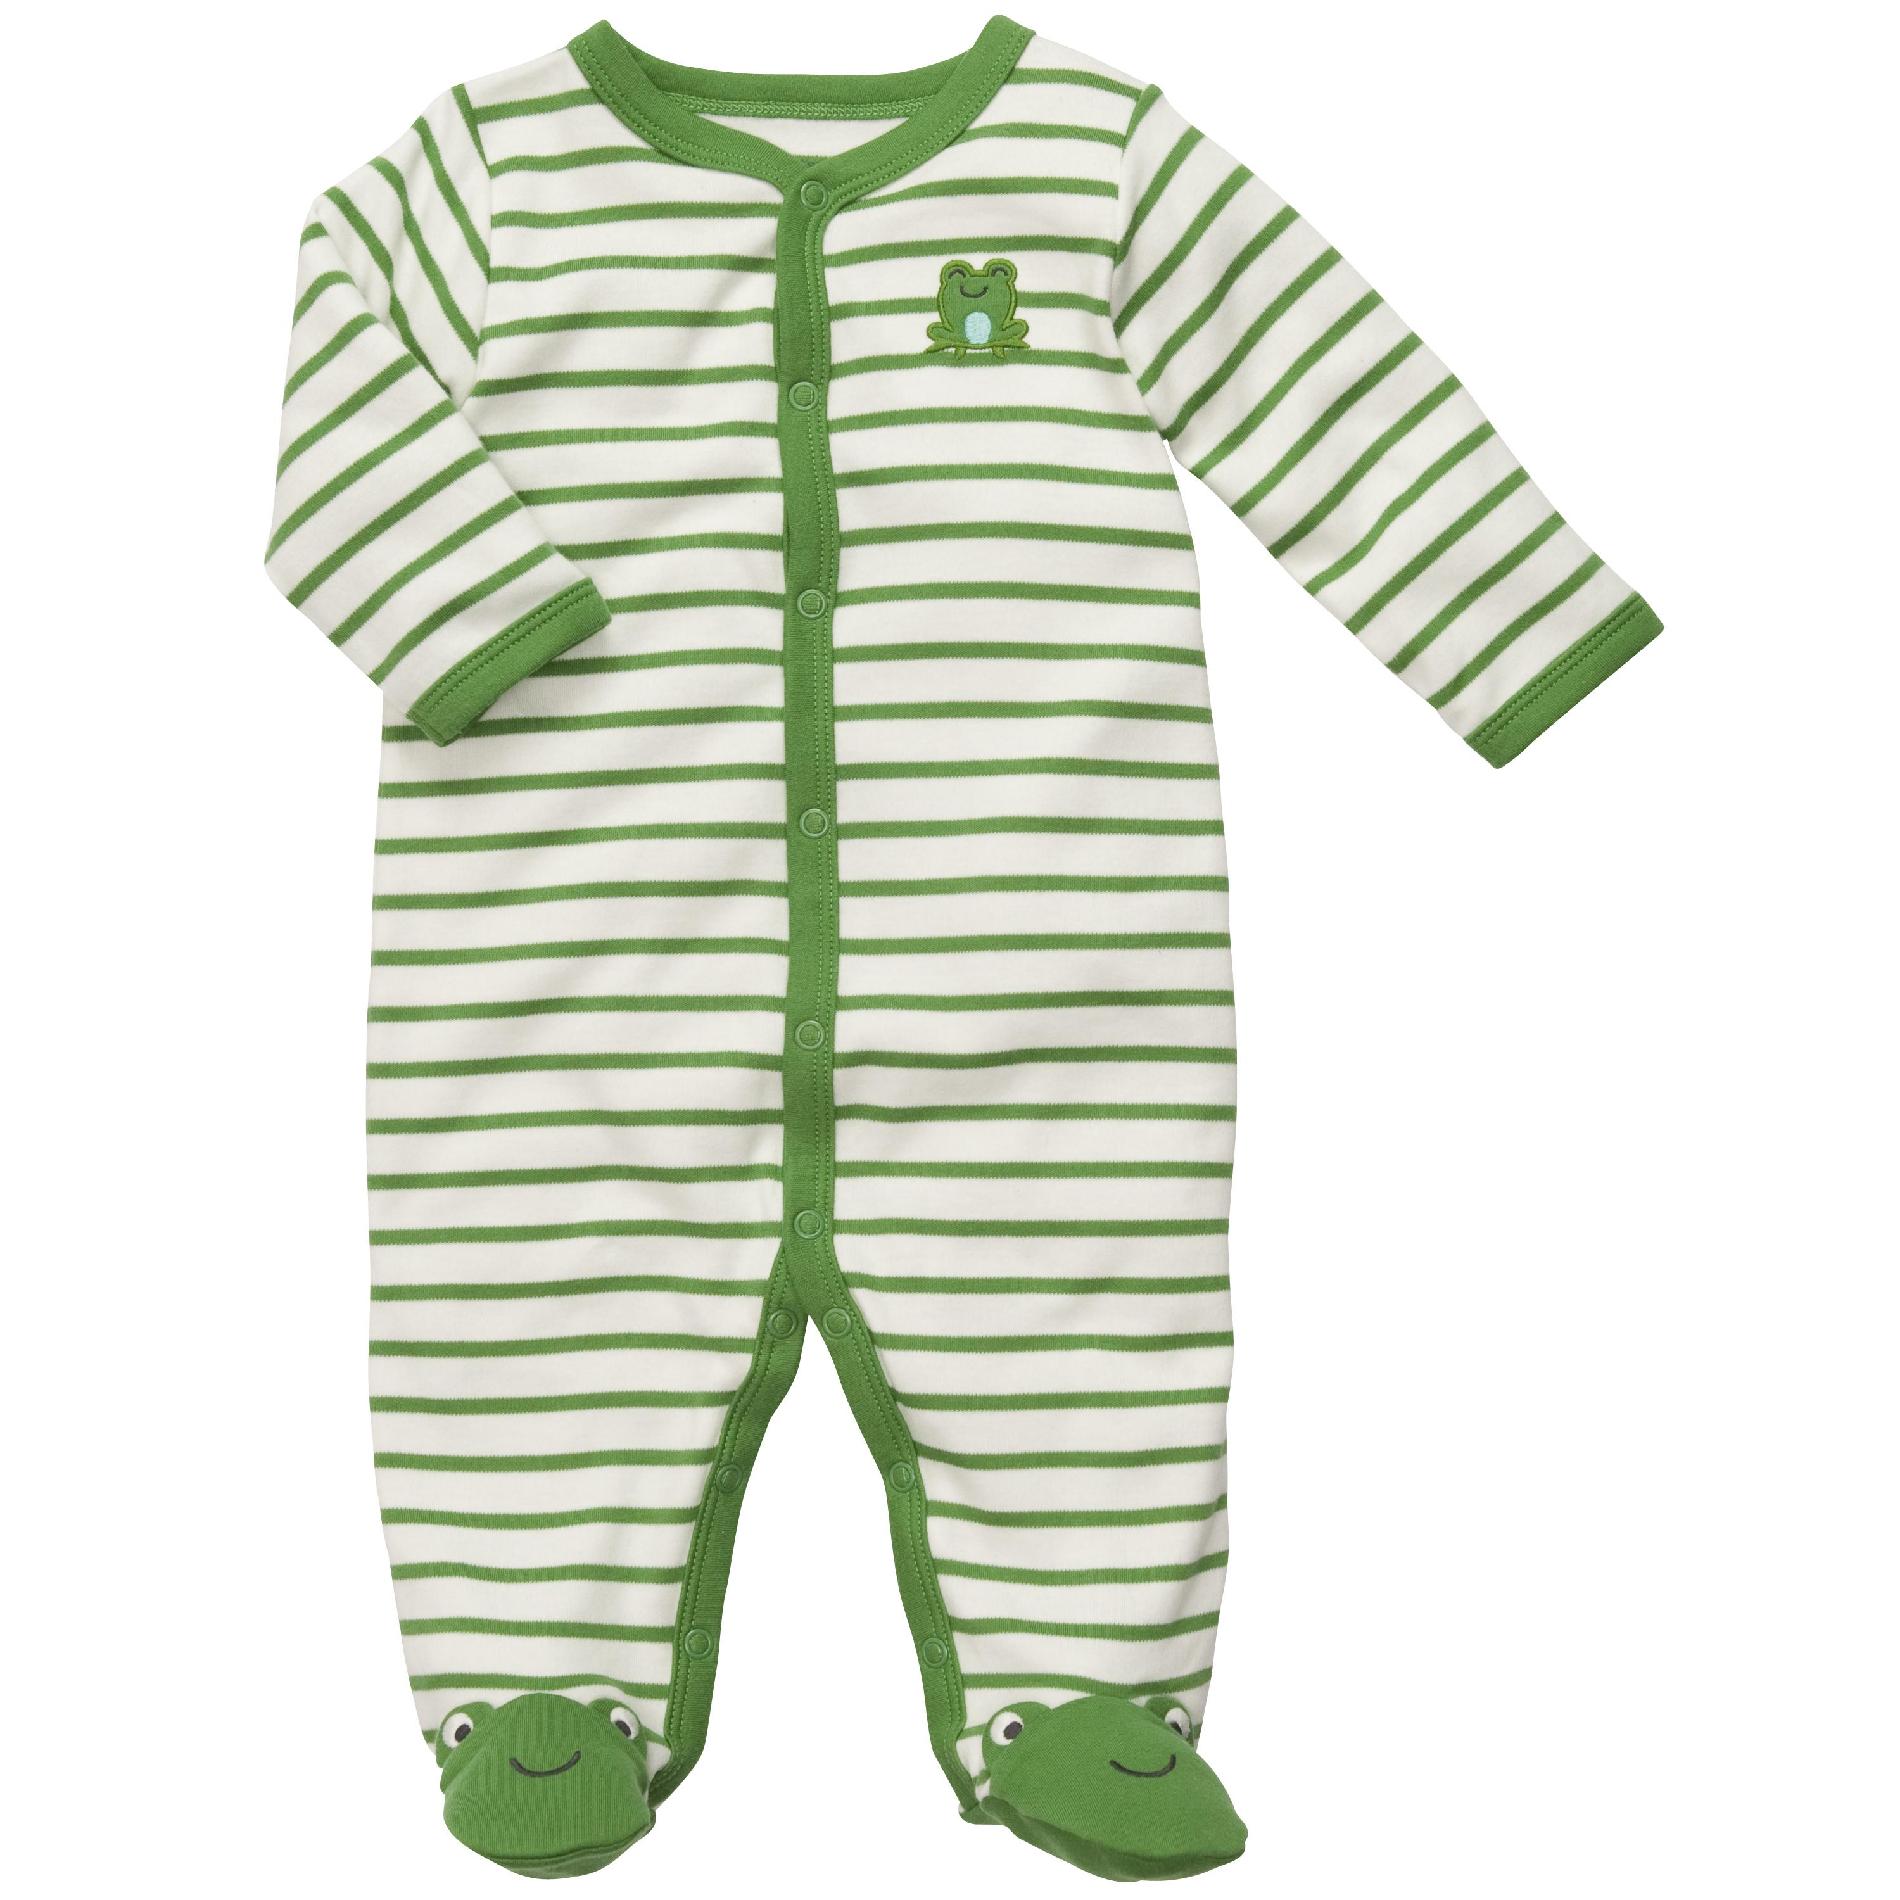 Carter's Infant Boy's Sleeper Pajamas - Frog